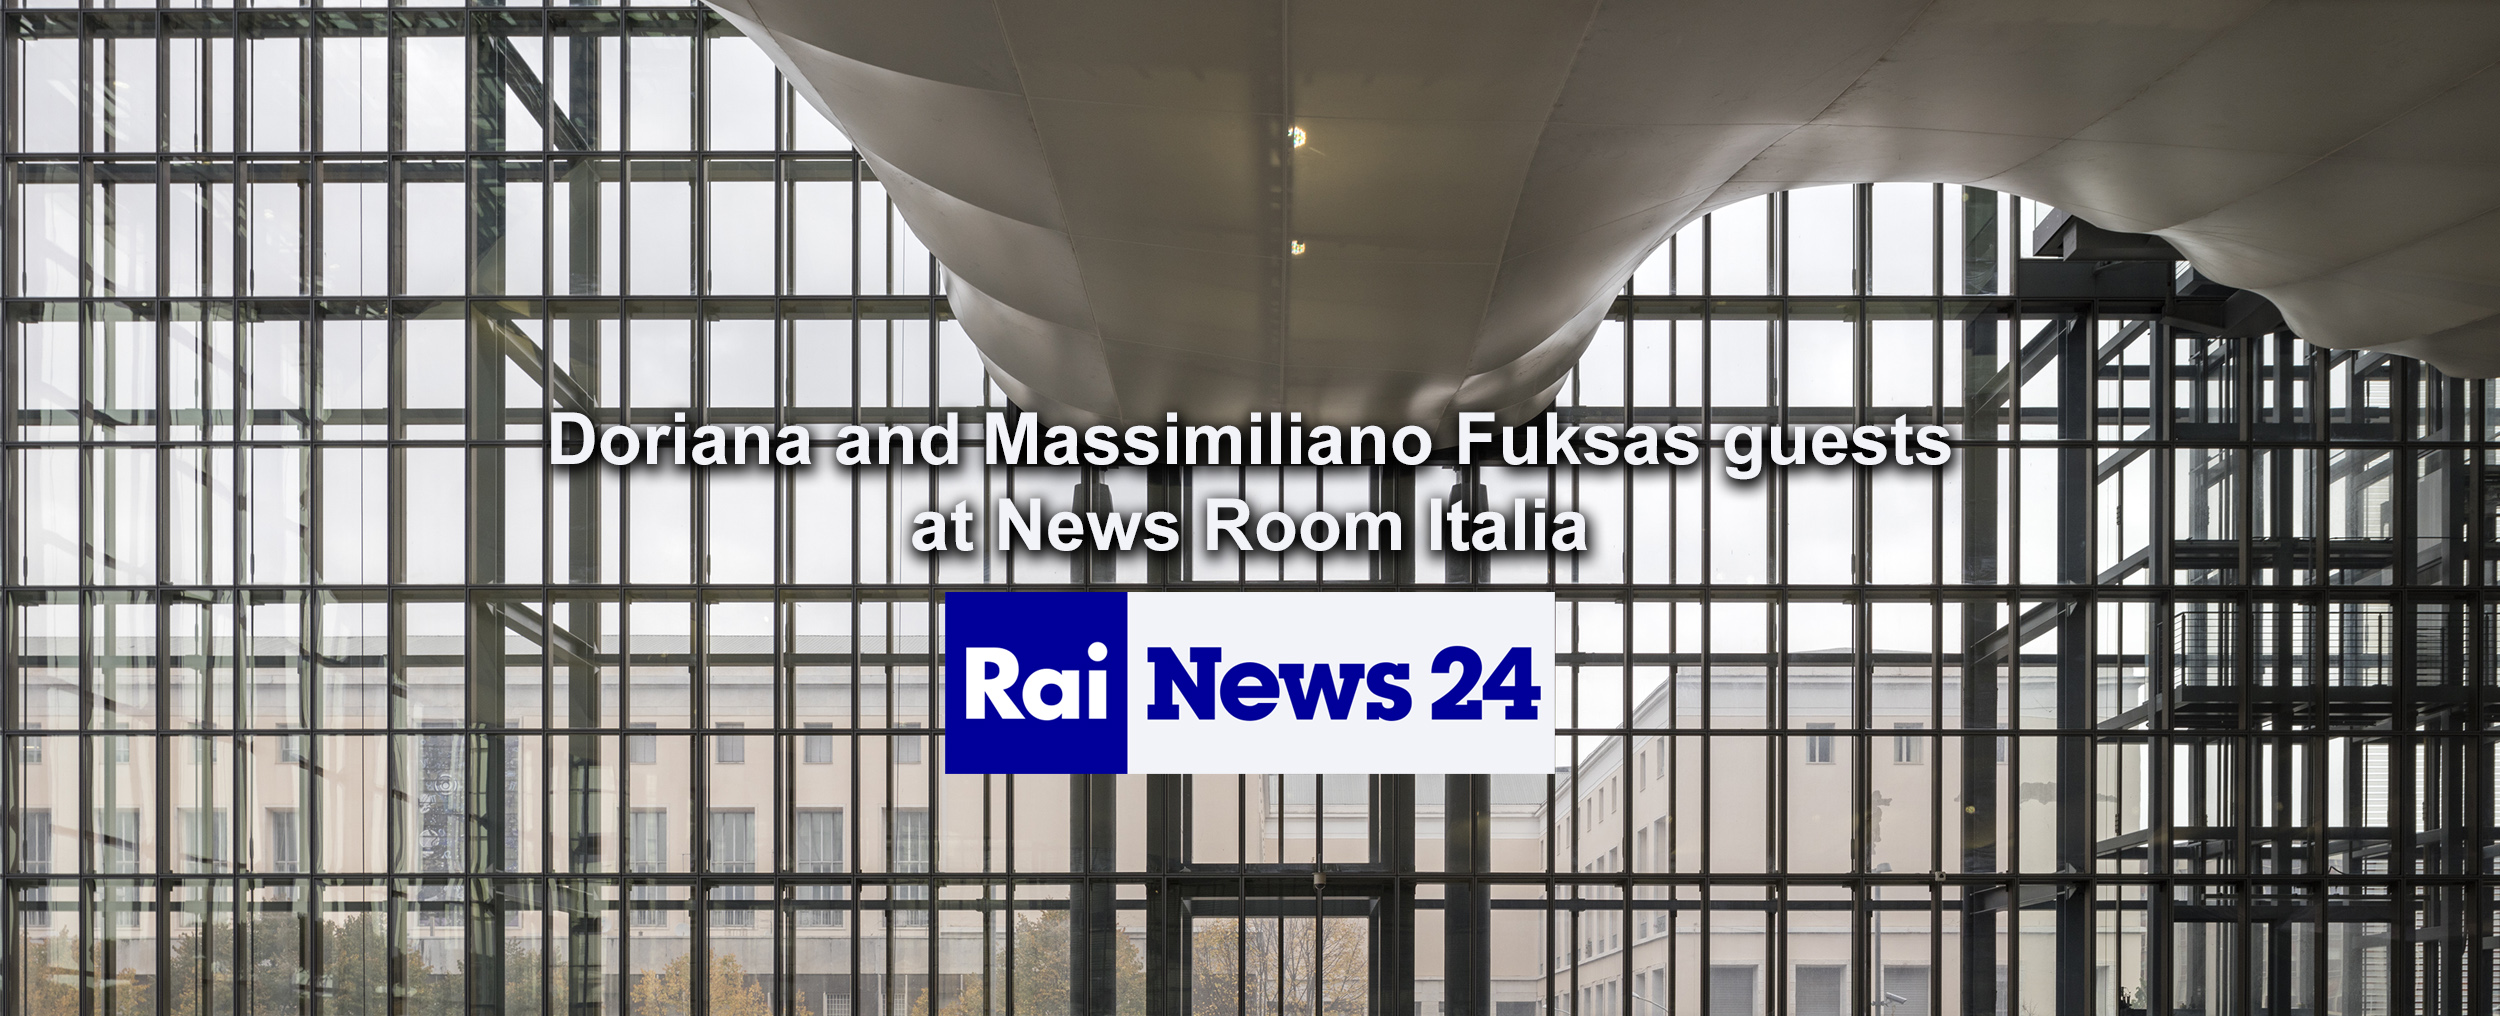 Doriana and Massimiliano Fuksas guests at Newsroom on RaiNews24 2021, January 28